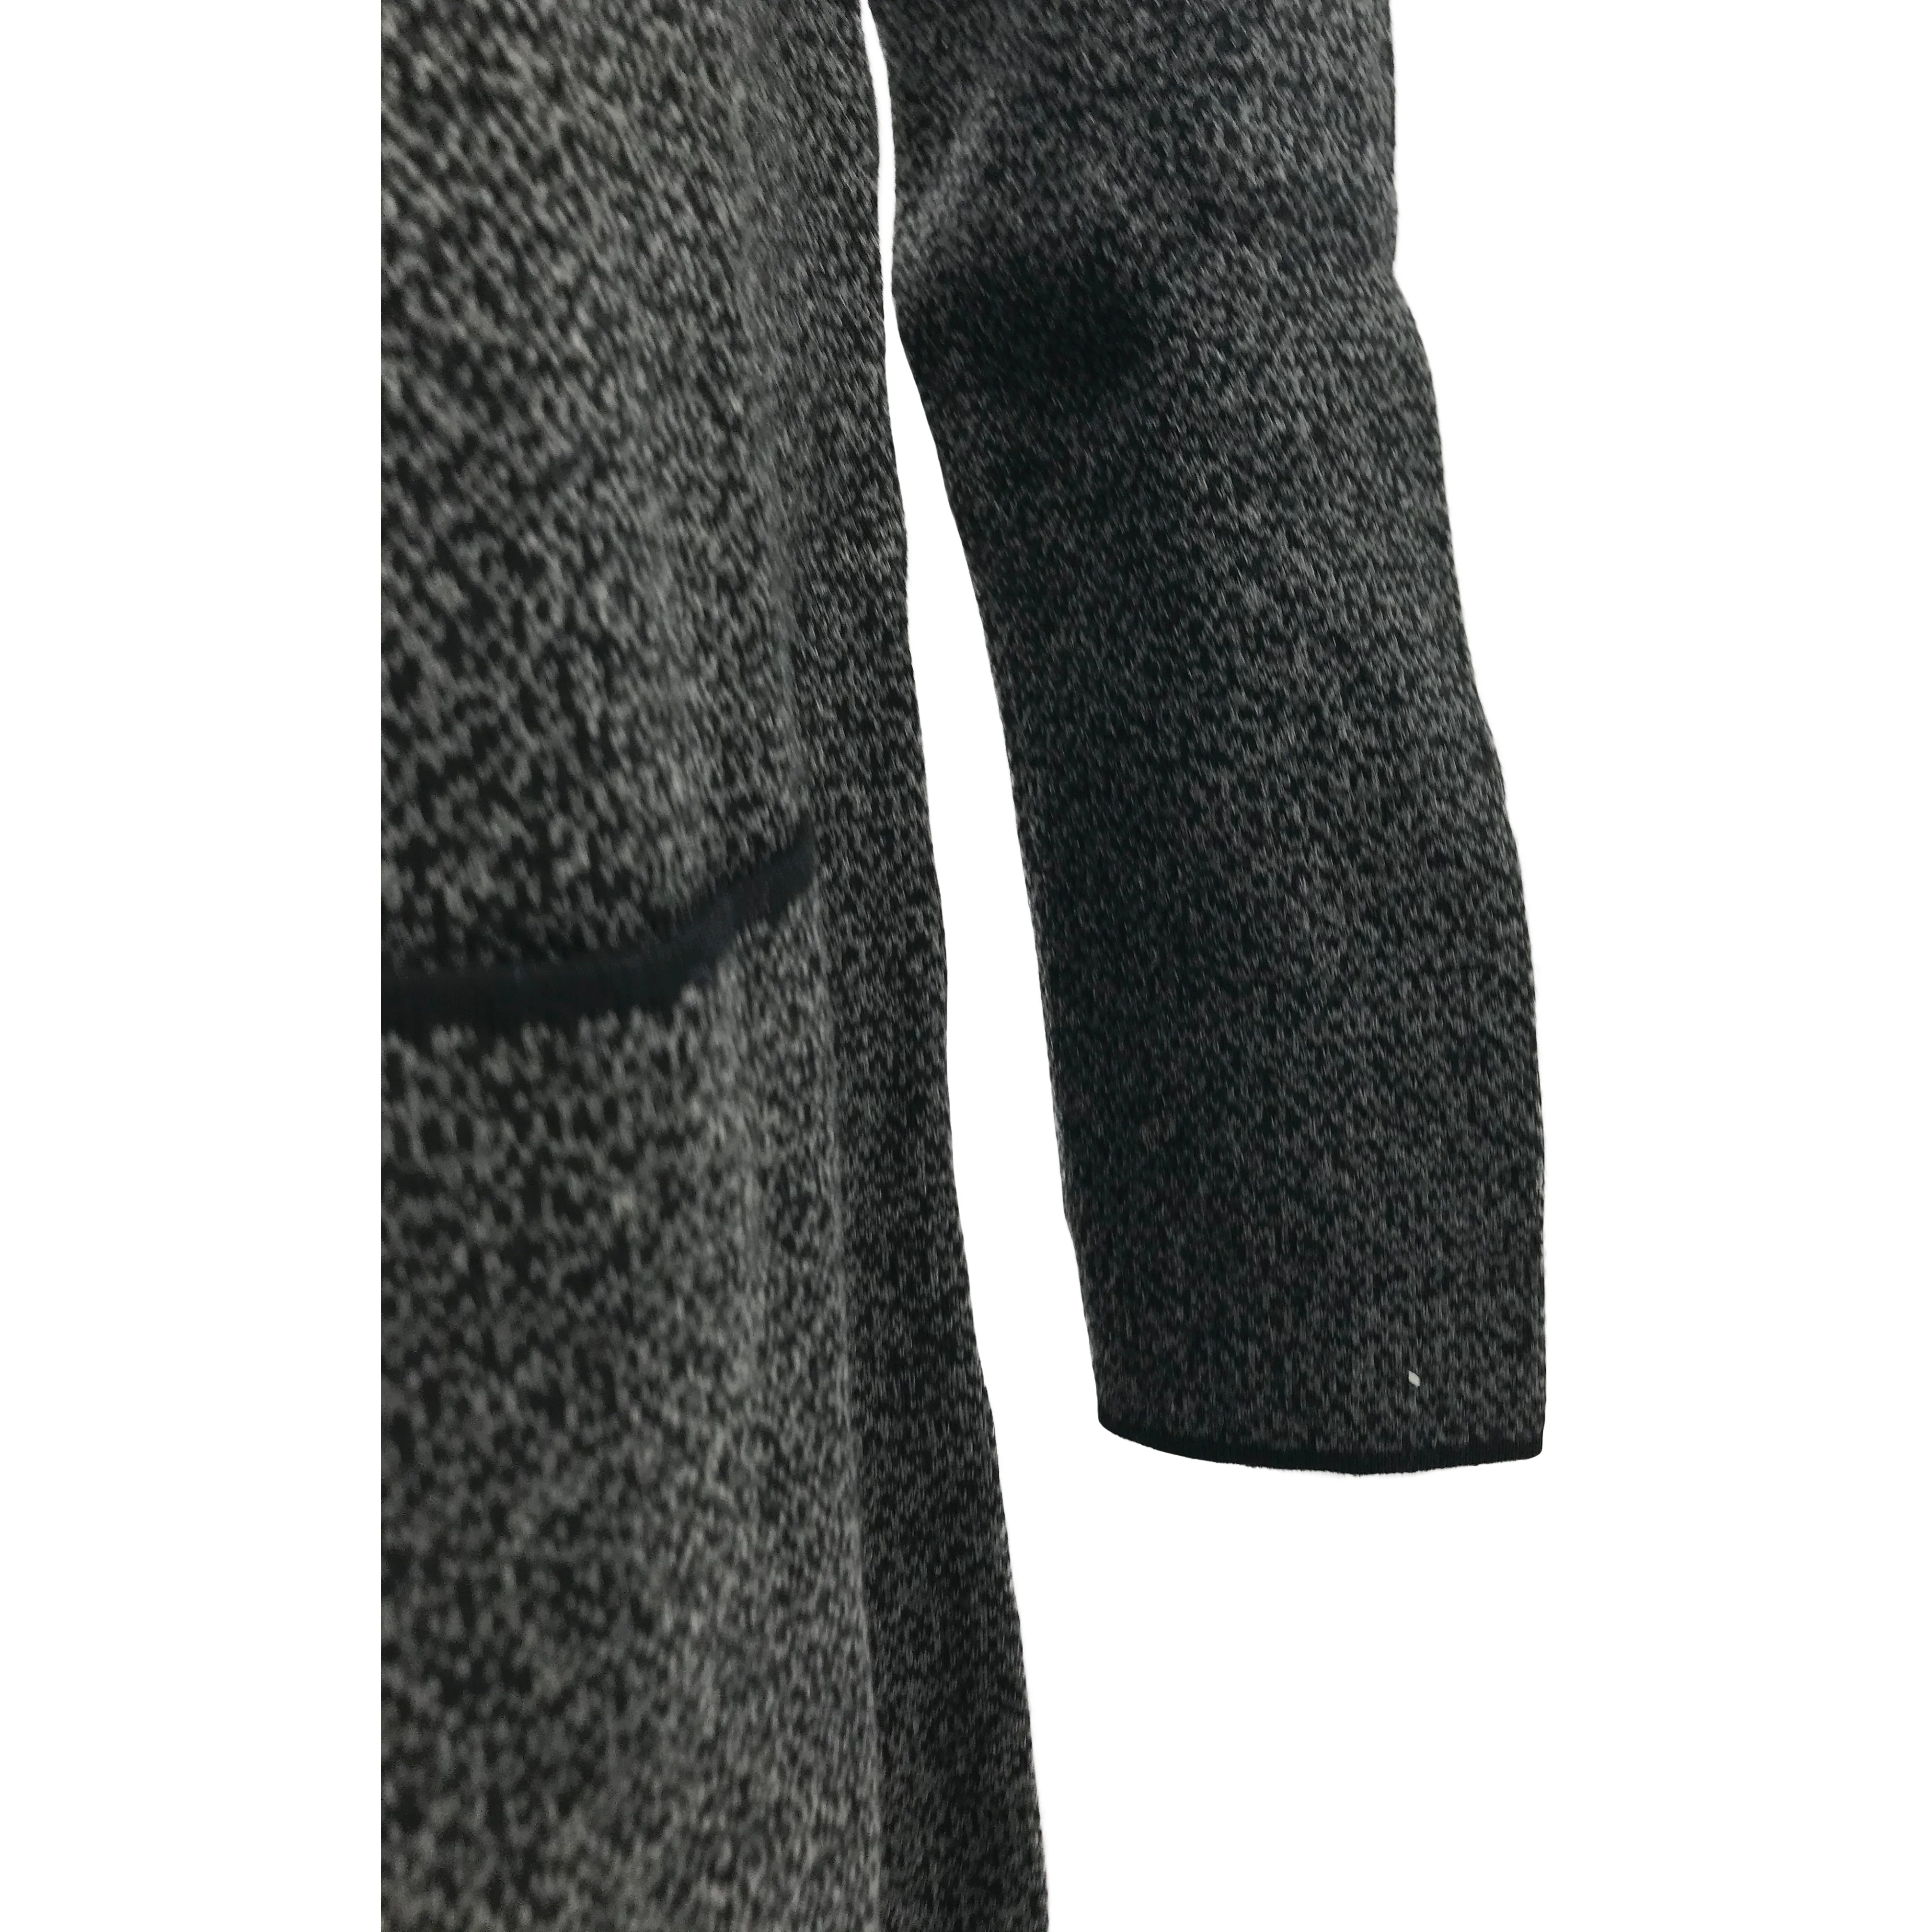 Nicole Miller Women's Zip Up Sweater / Black & Grey / Size Small